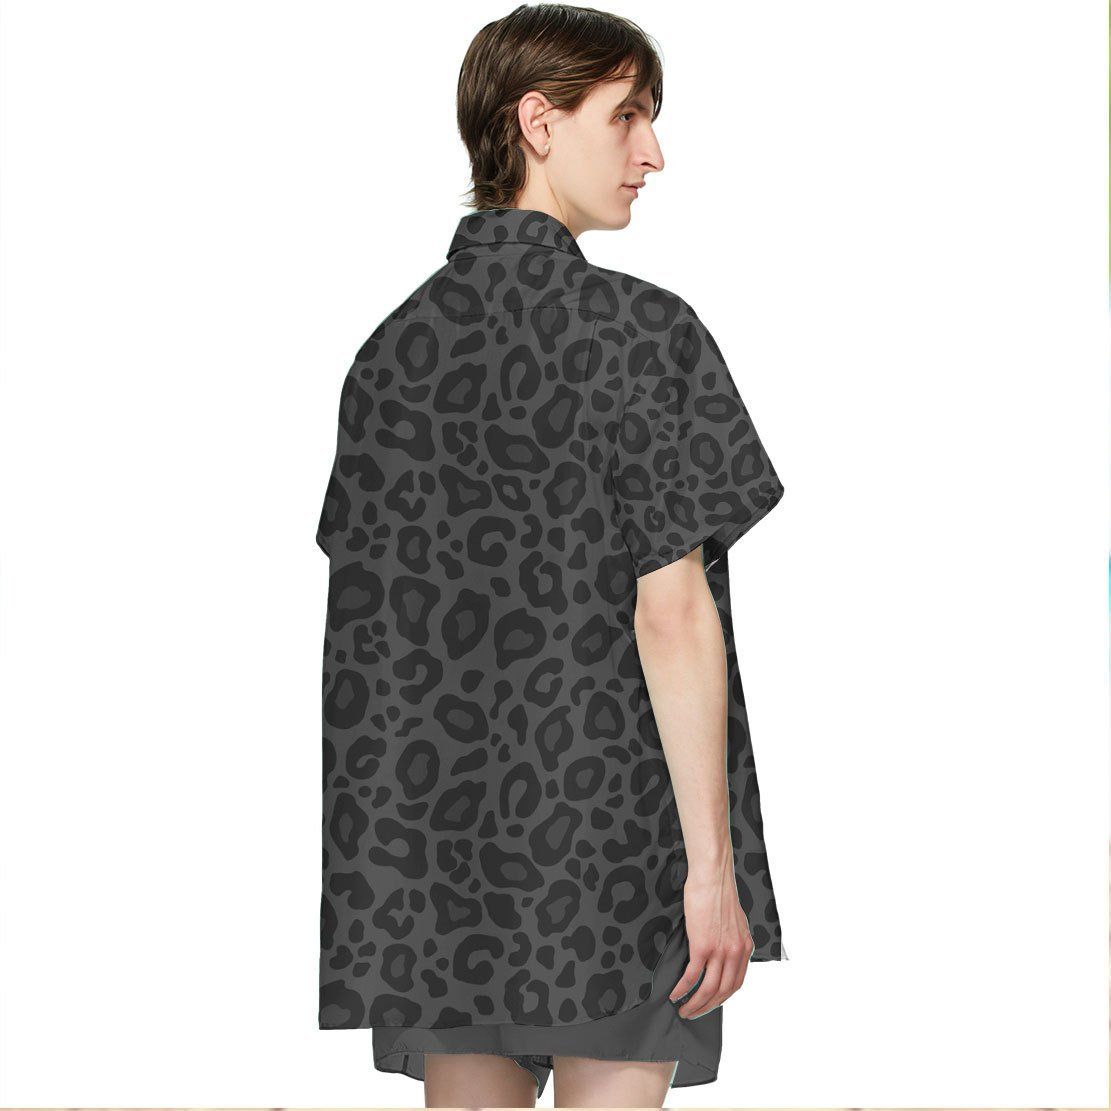 Black Leopard Custom Hawaiian Shirts For Men And Women 7